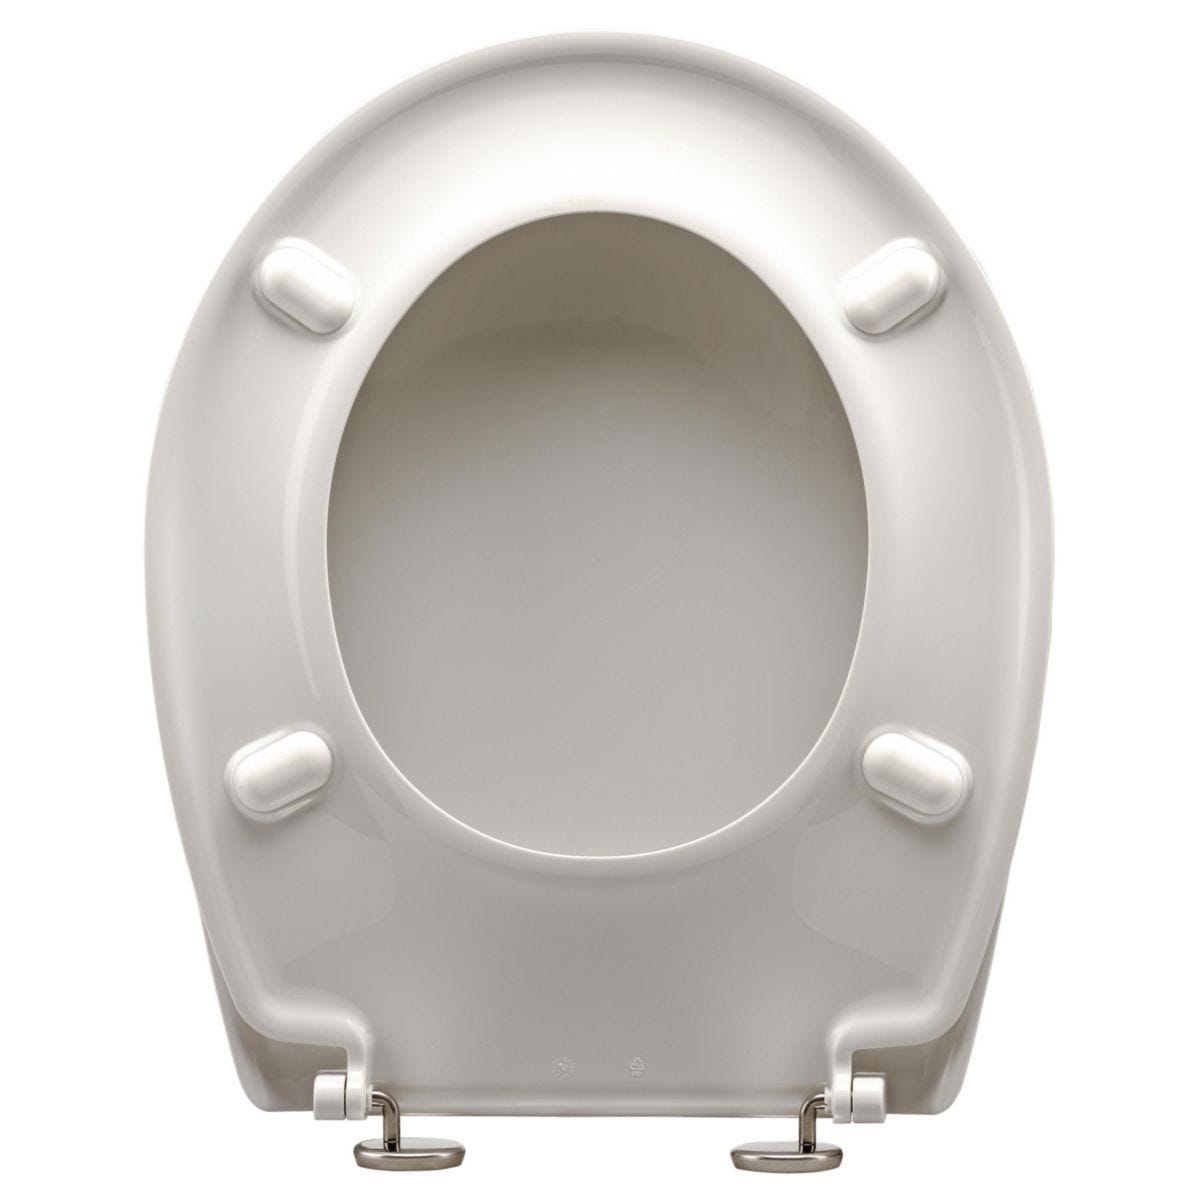 abattant wc - opio - charnière individuelle ajustable - thermoplastique - blanc - siamp 47105610 4